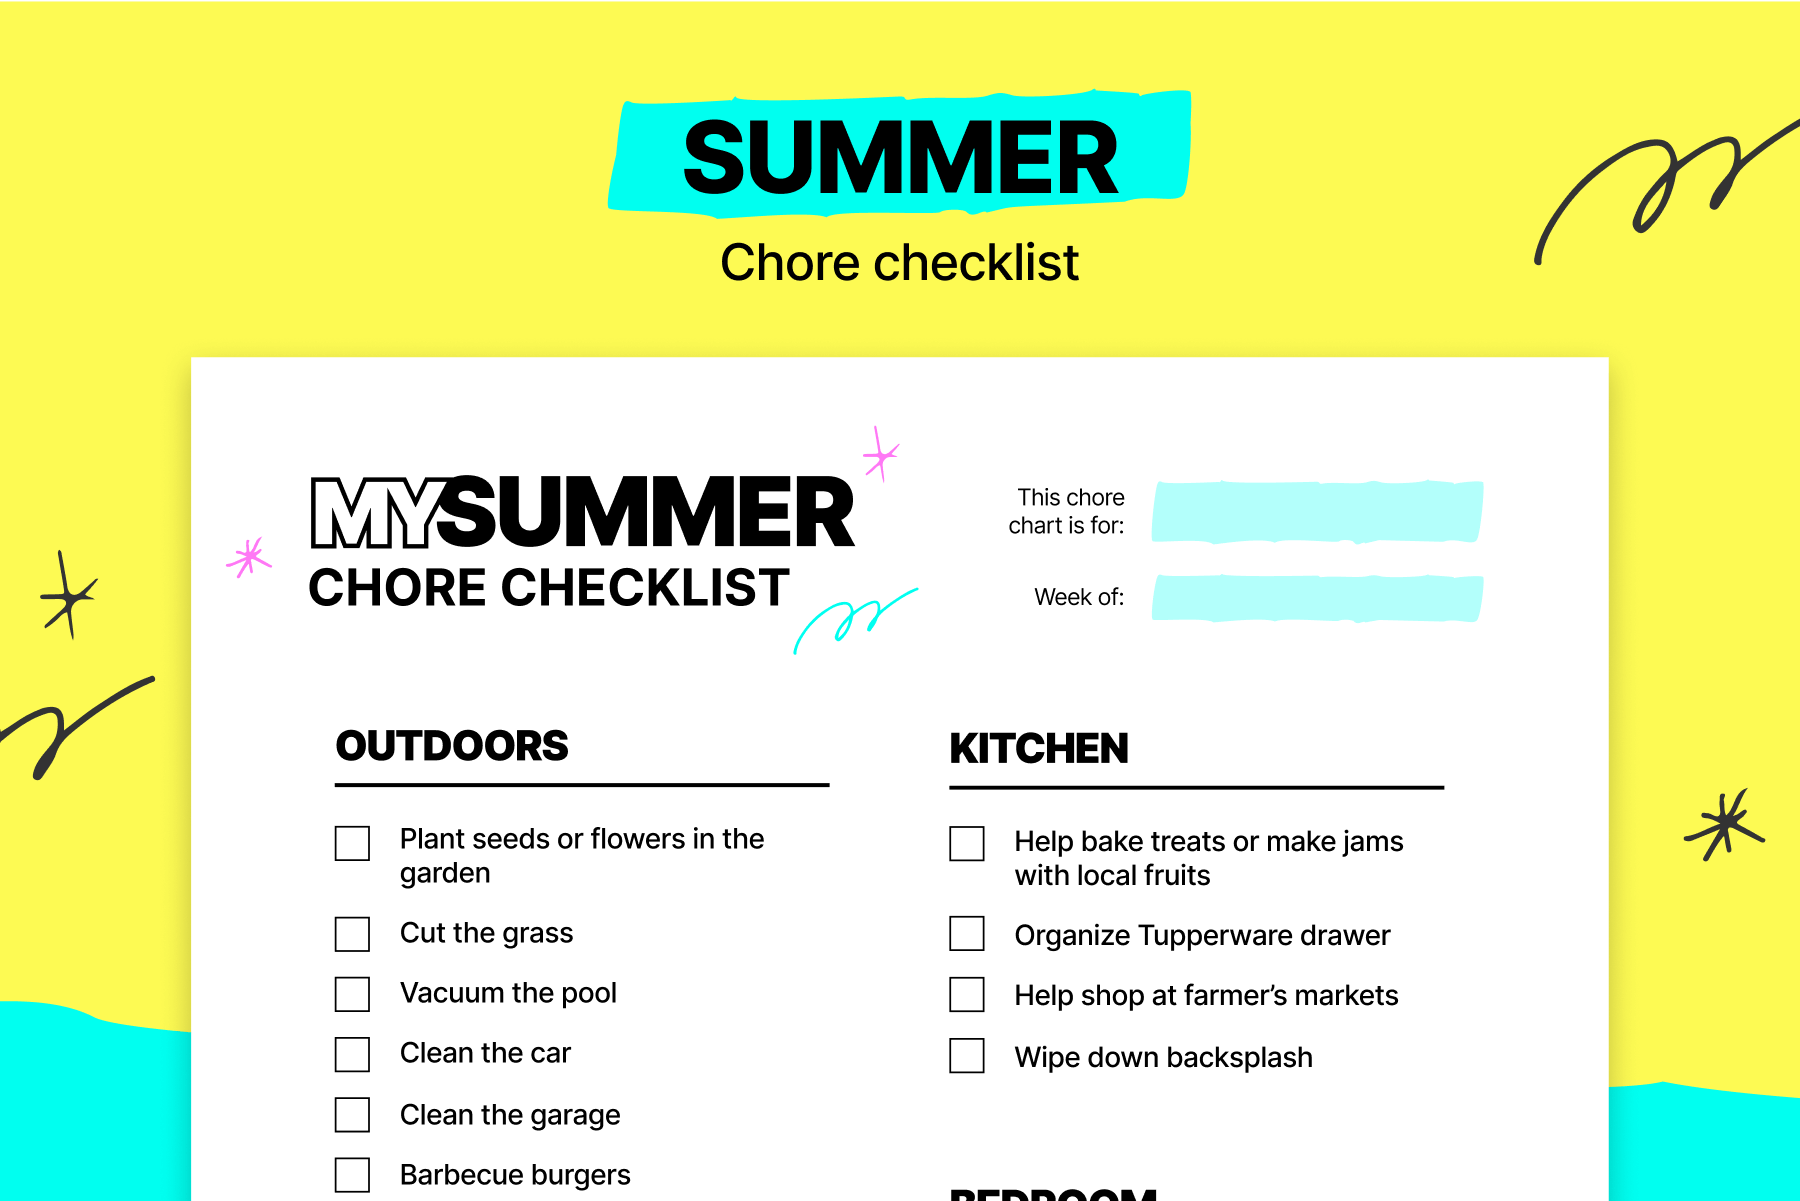 Summer chore checklist